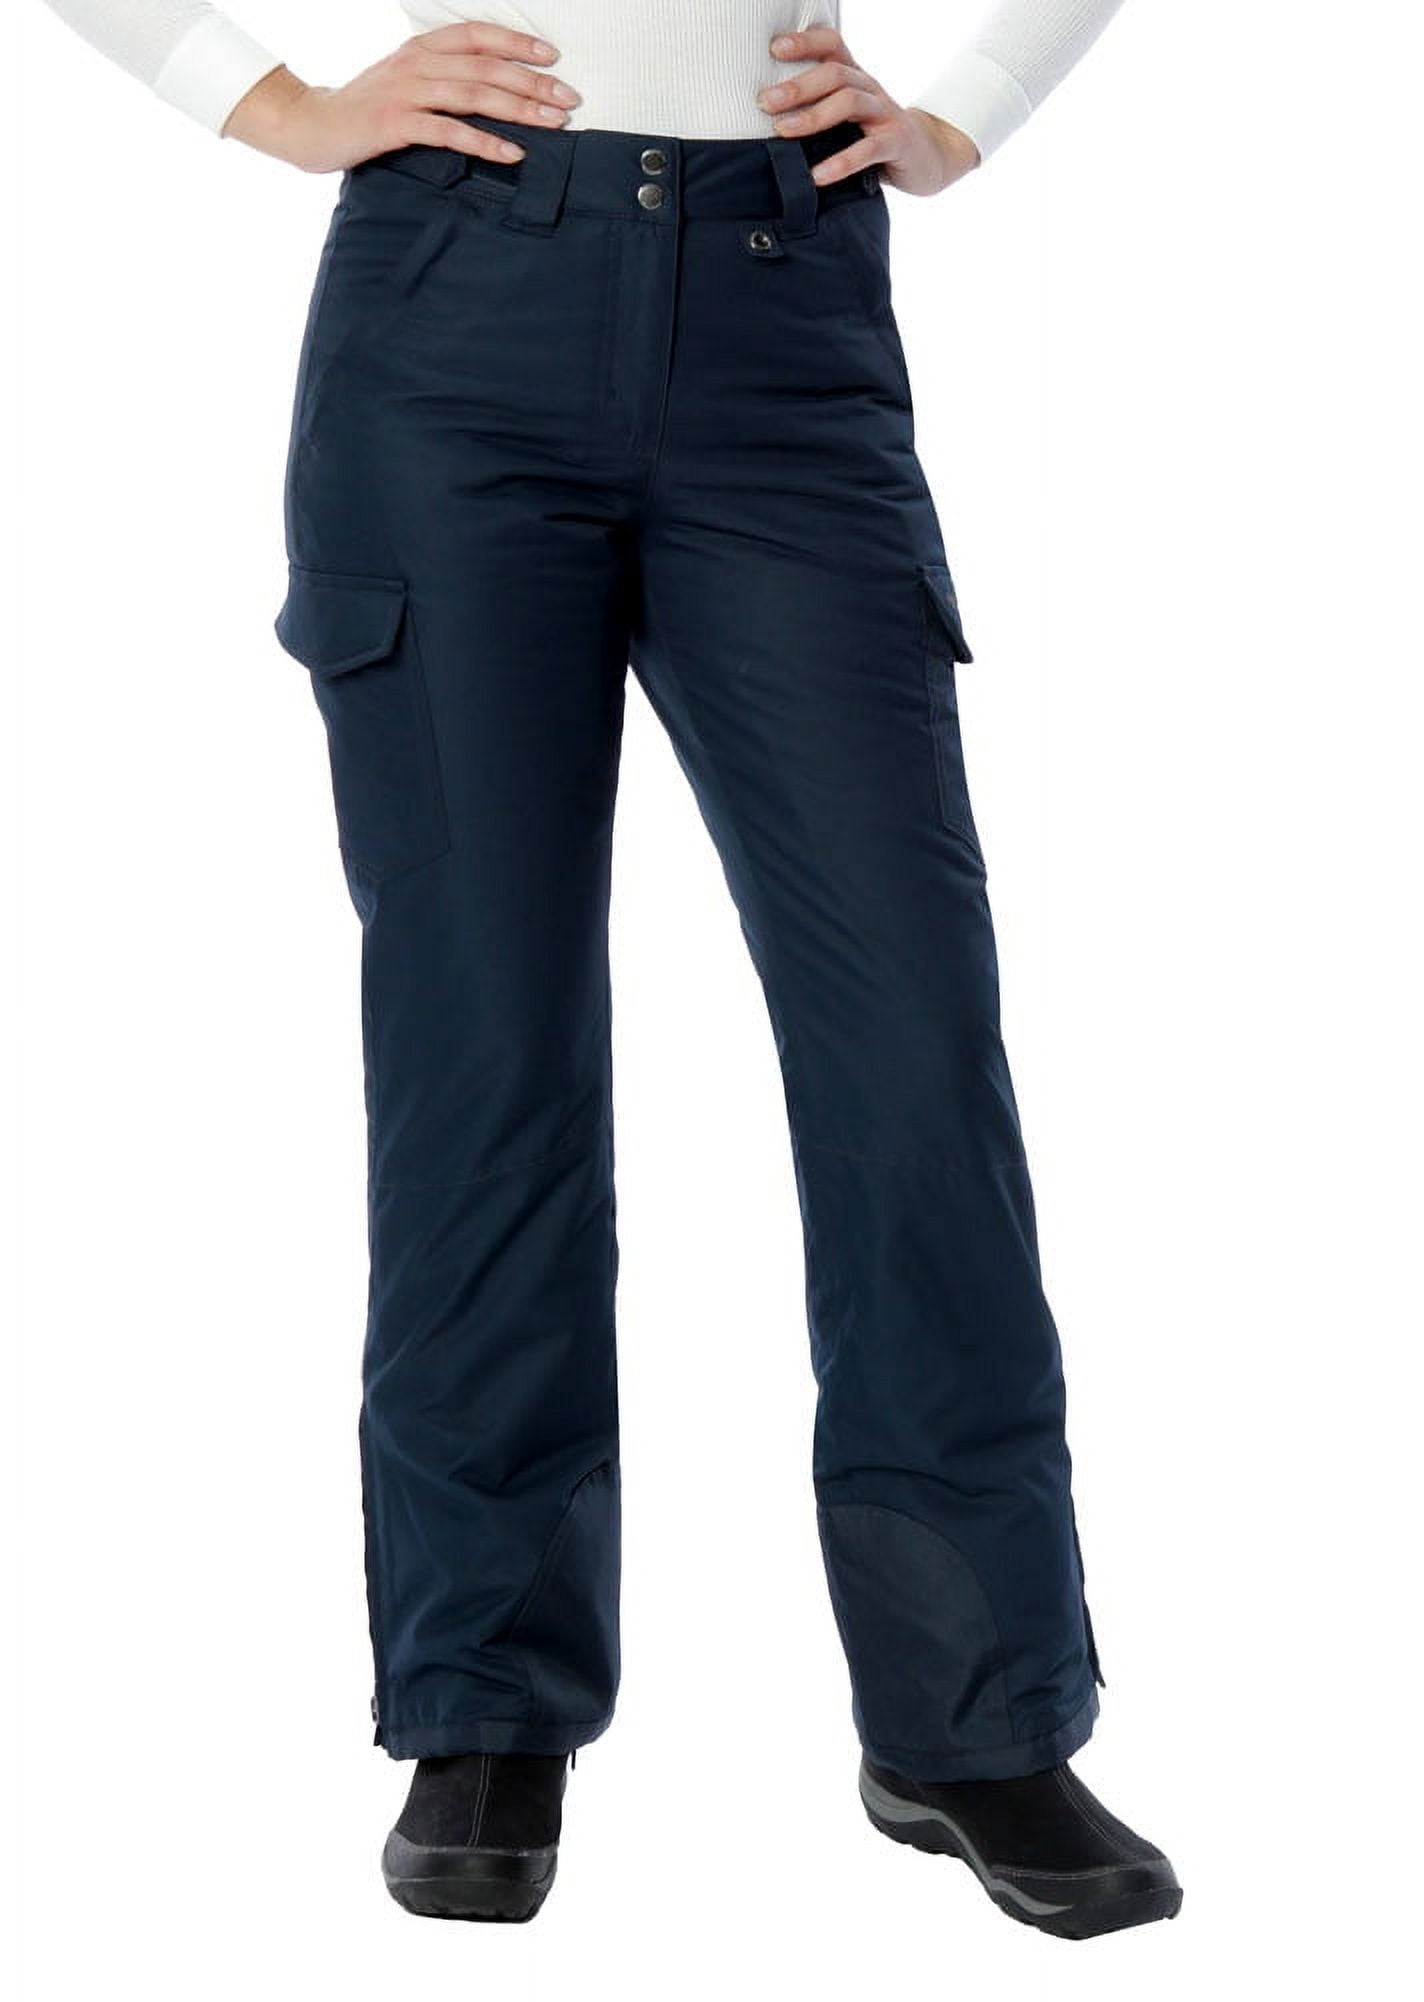 Arctix Women's Insulated Cargo Snowsports Pants, Black, Xsmall